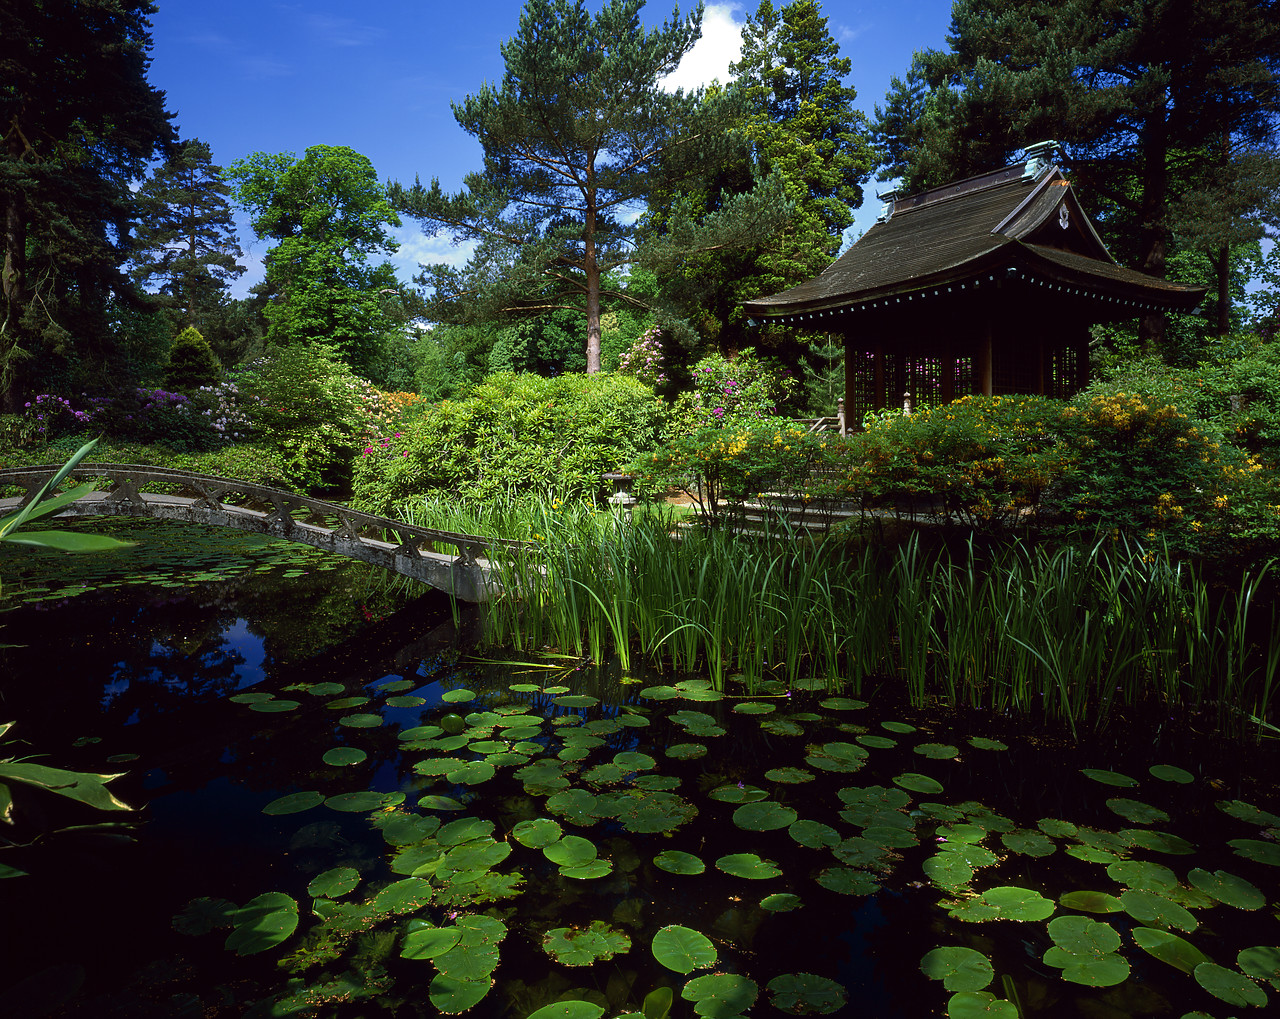 #030204-2 - Japanese Garden, Tatton Park, Cheshire, England